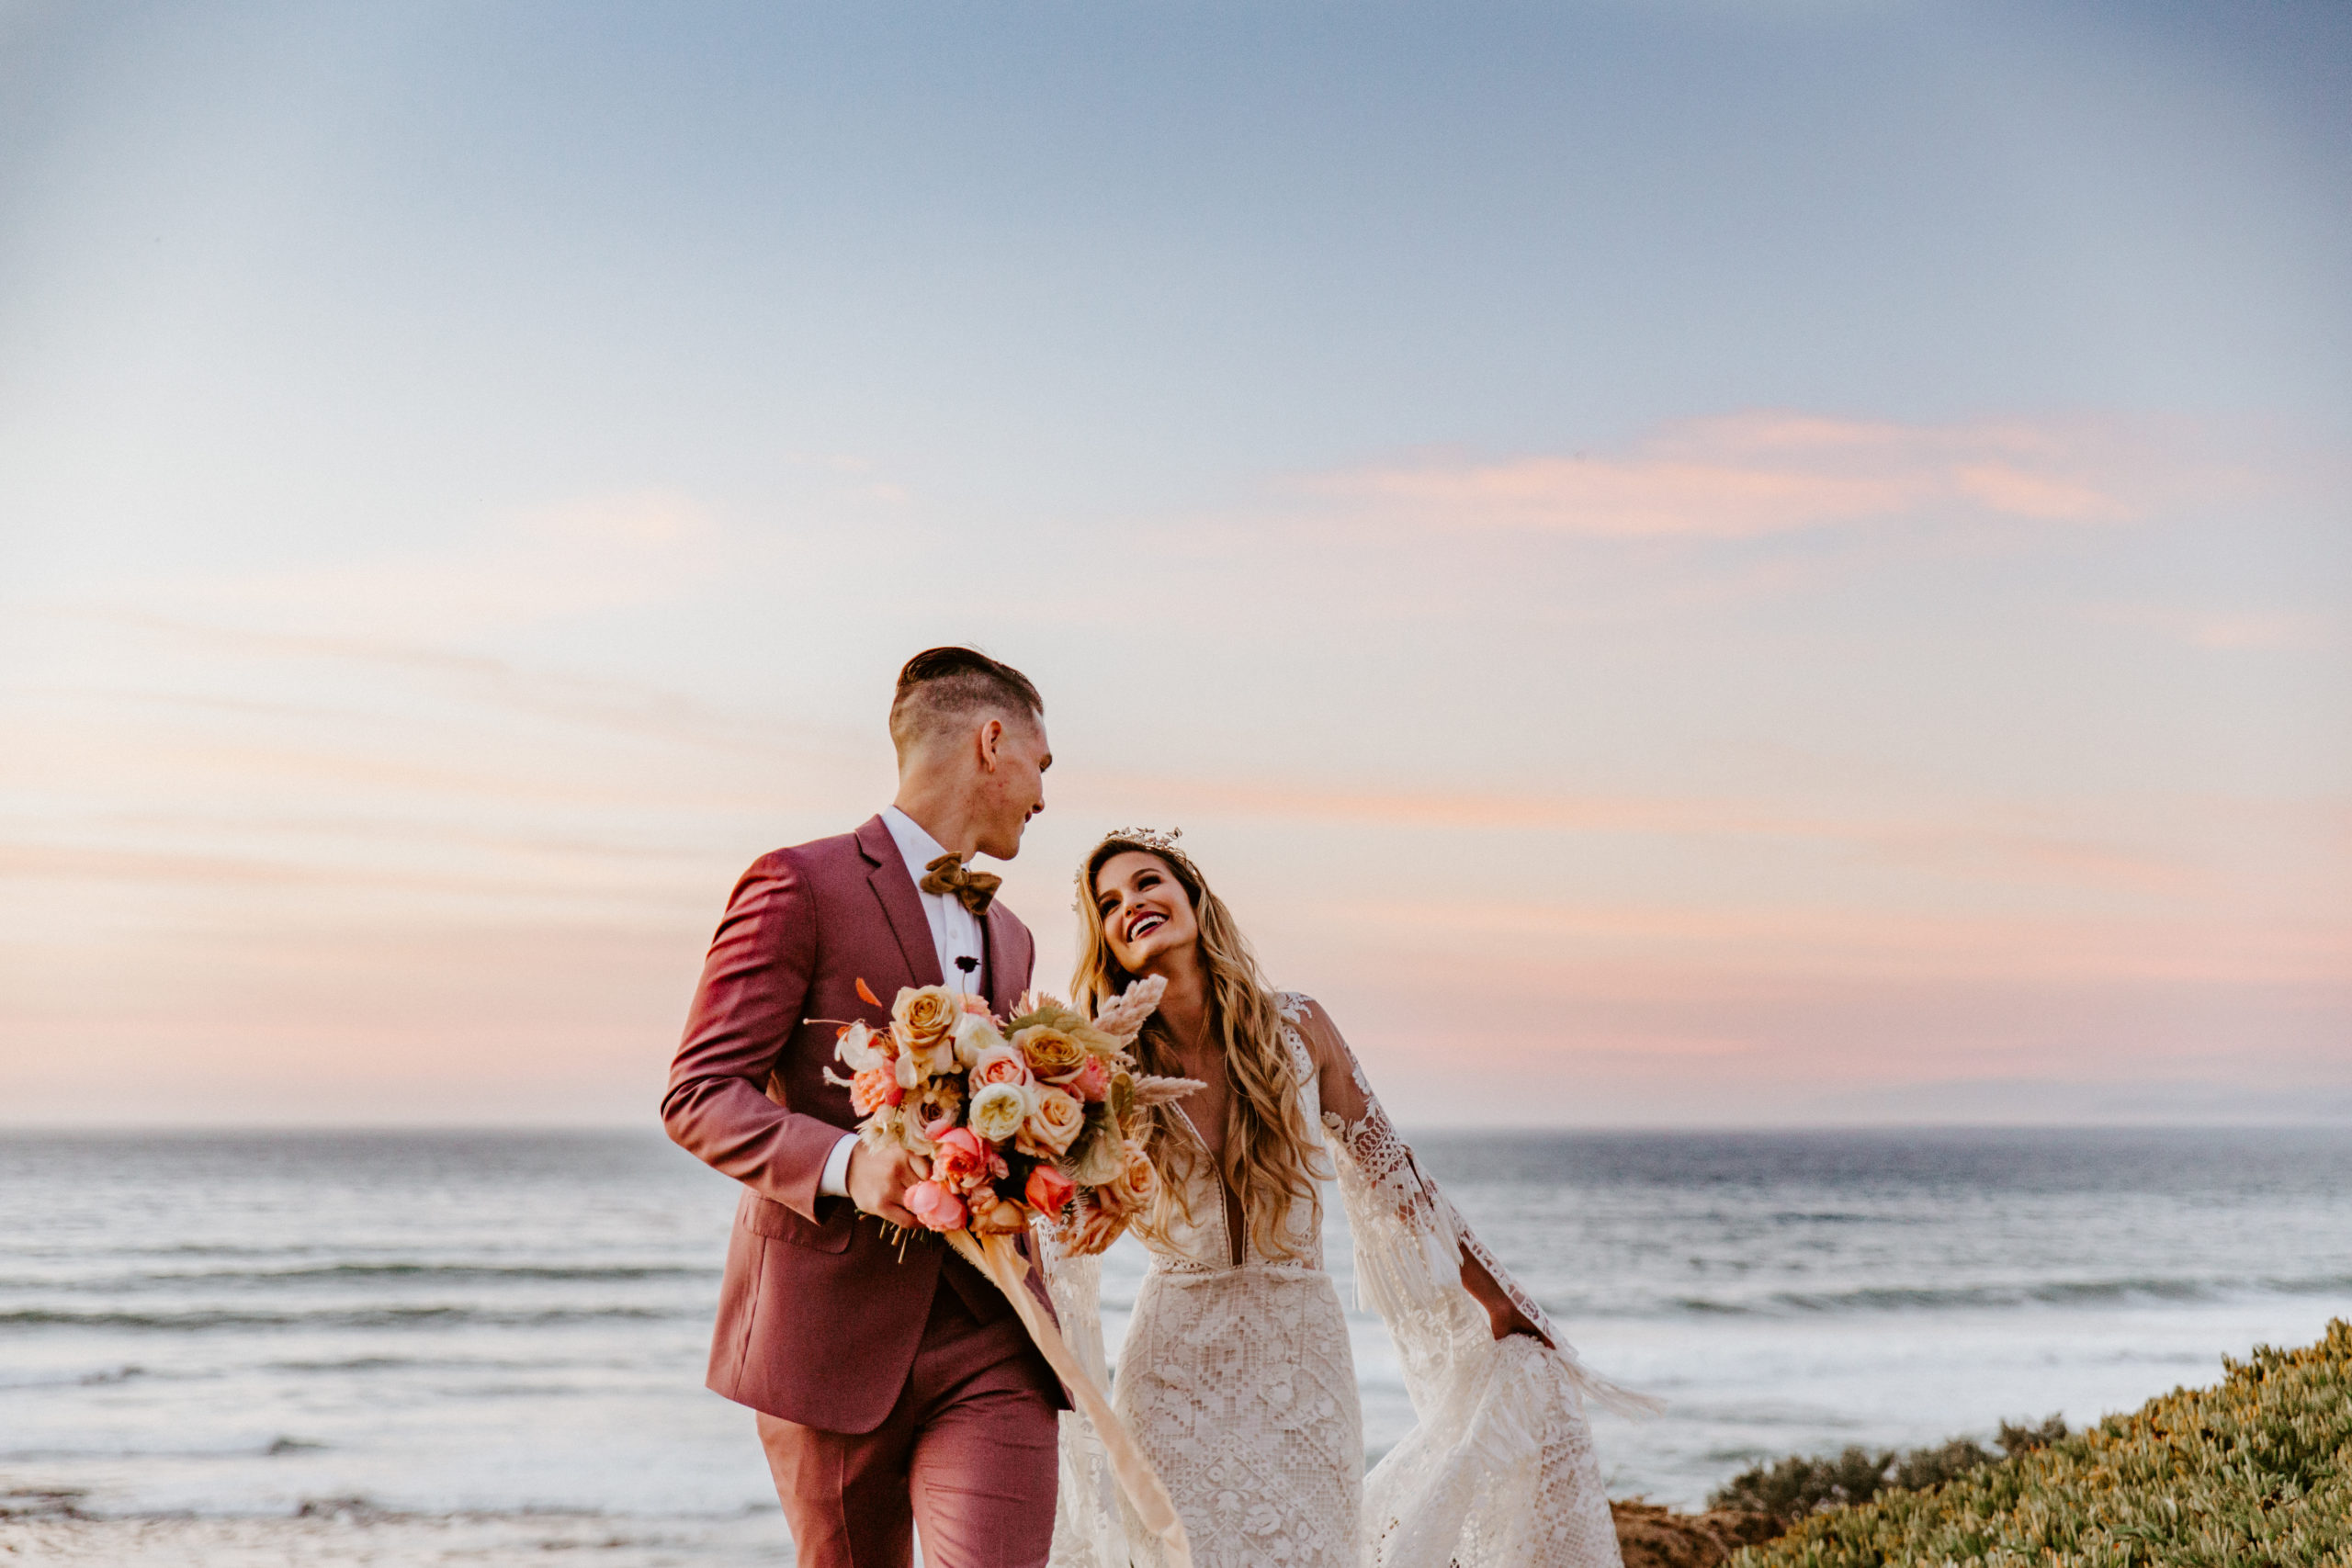 Central Coast Wedding, Central Coast Wedding Photographer, Central Coast Elopement, Santa Barbara Wedding Photographer